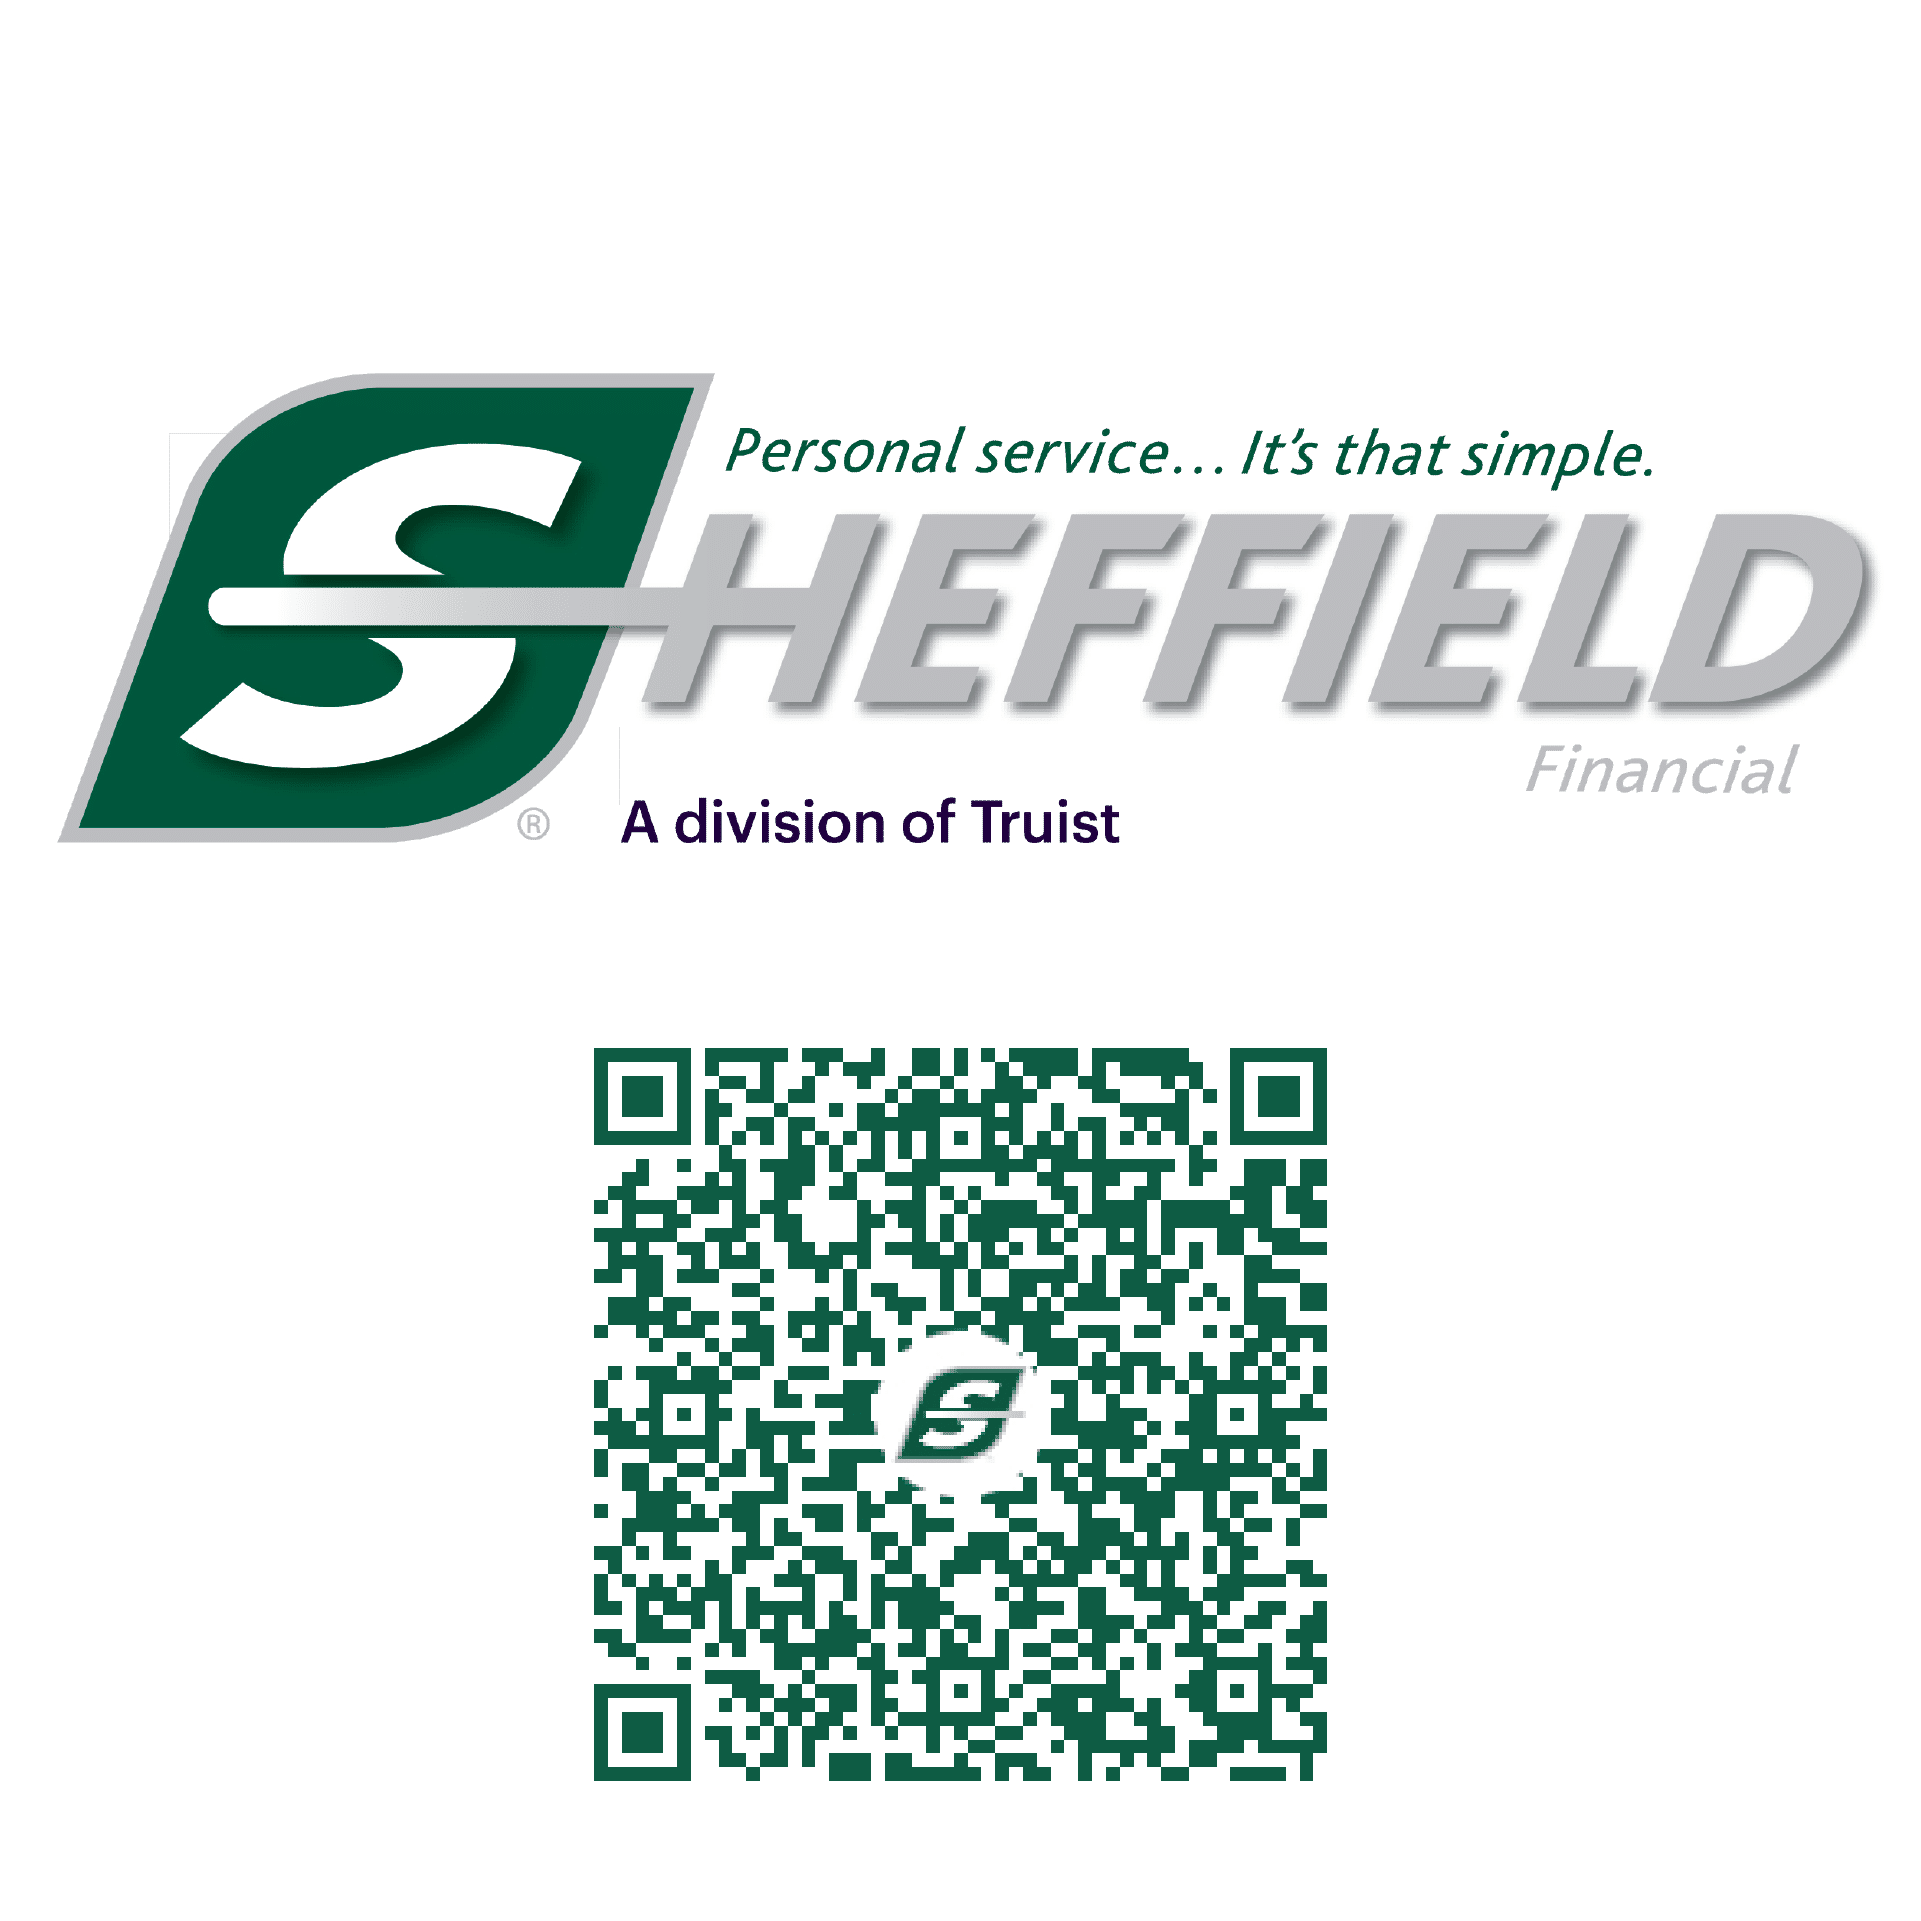 sheffield-logo.png